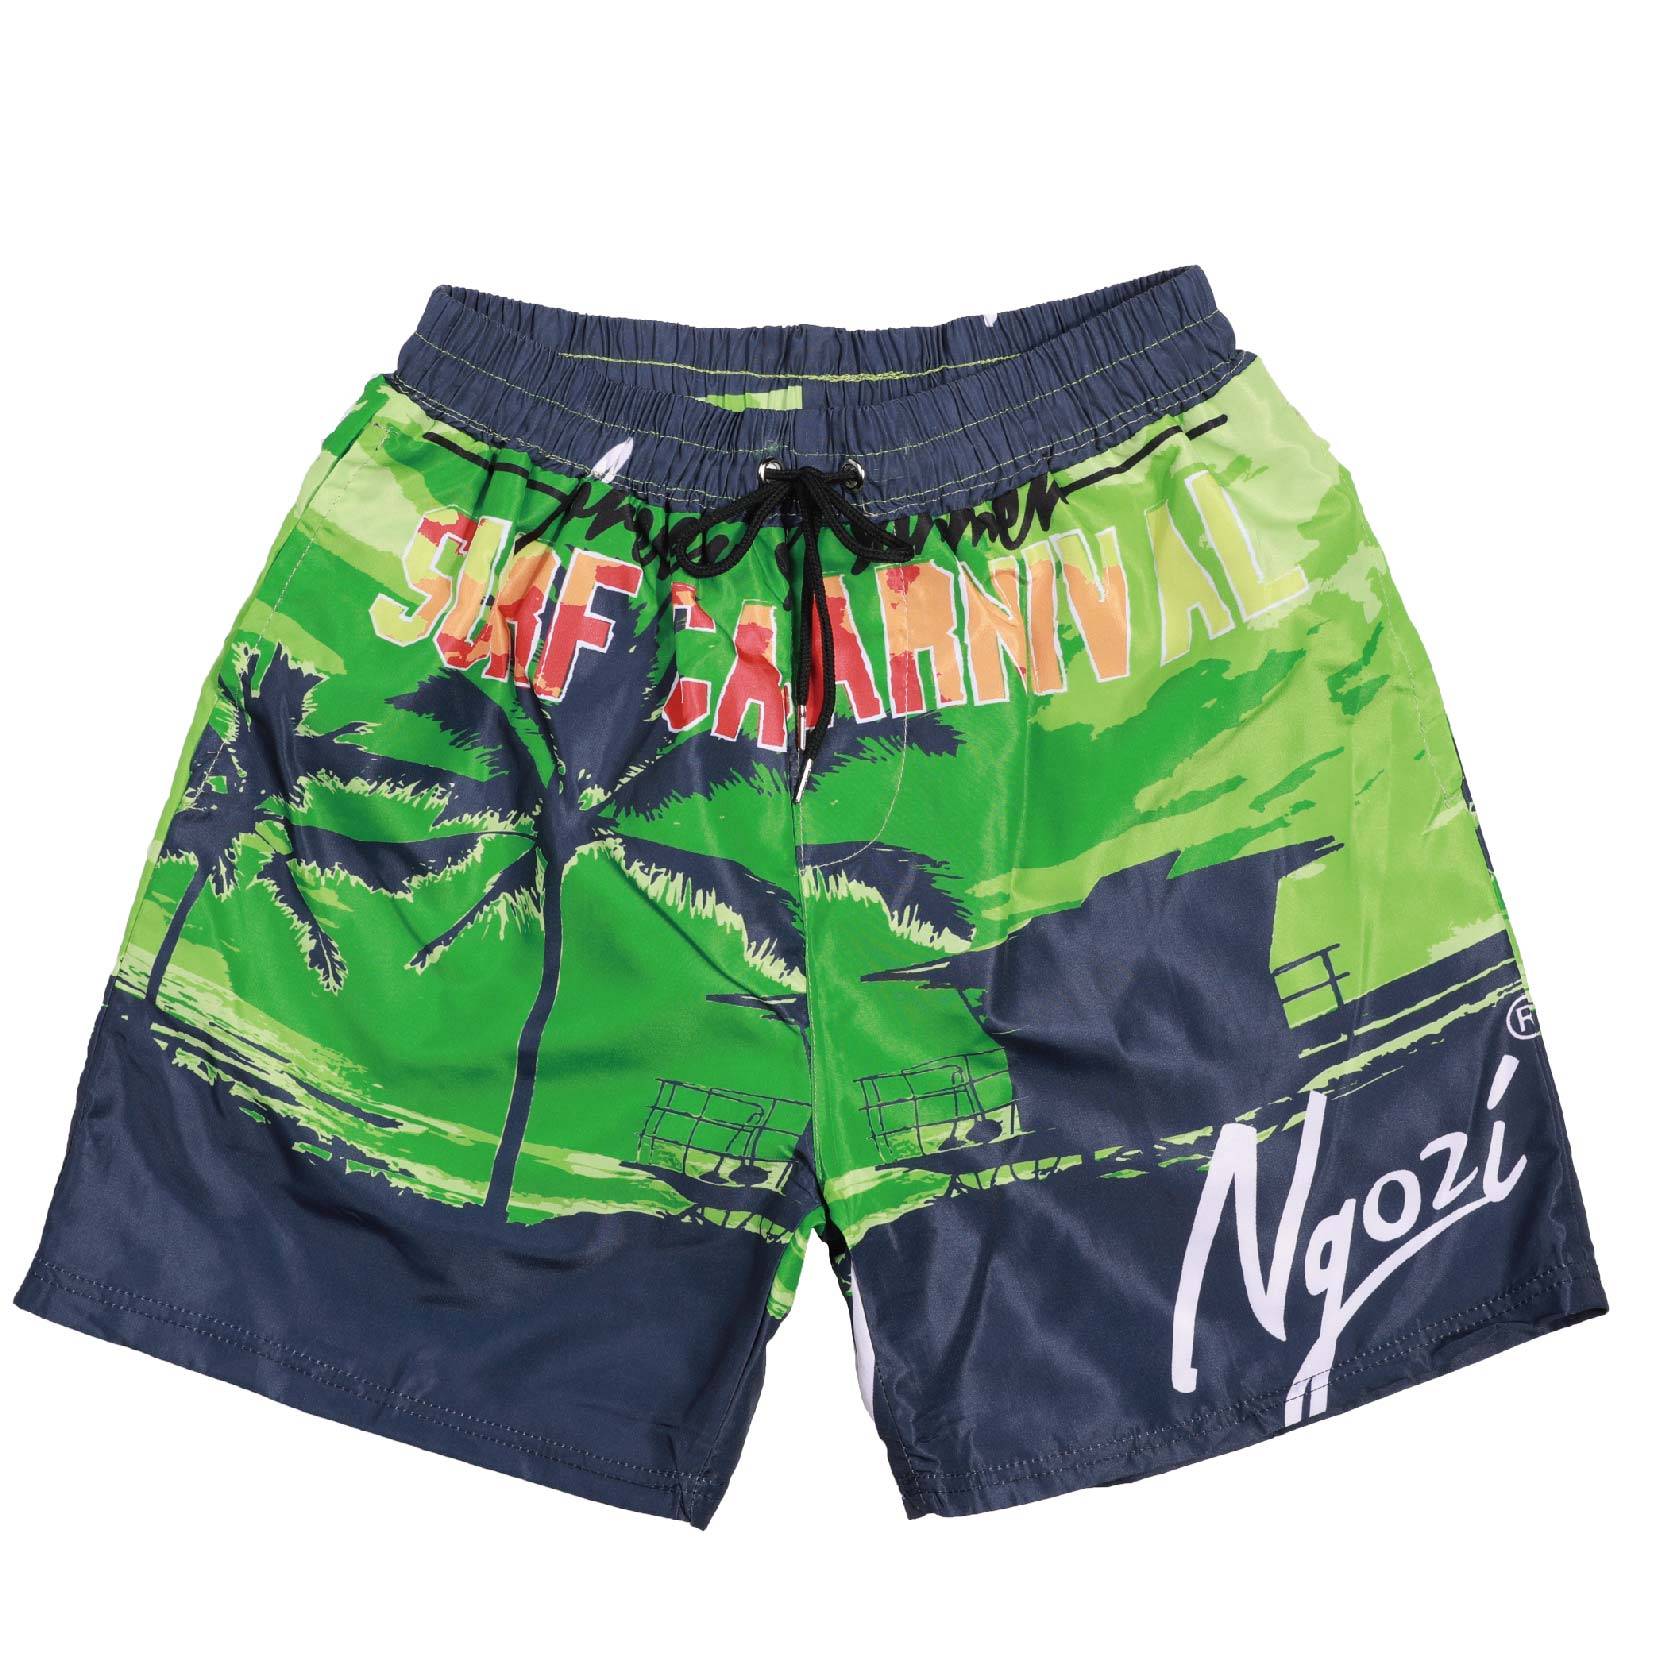 Best Price for Men Shorts Pants - Ngozi Beach Shorts Men Quick Dry Coconut Tree Printed Elastic Waist （Green） – Fullerton